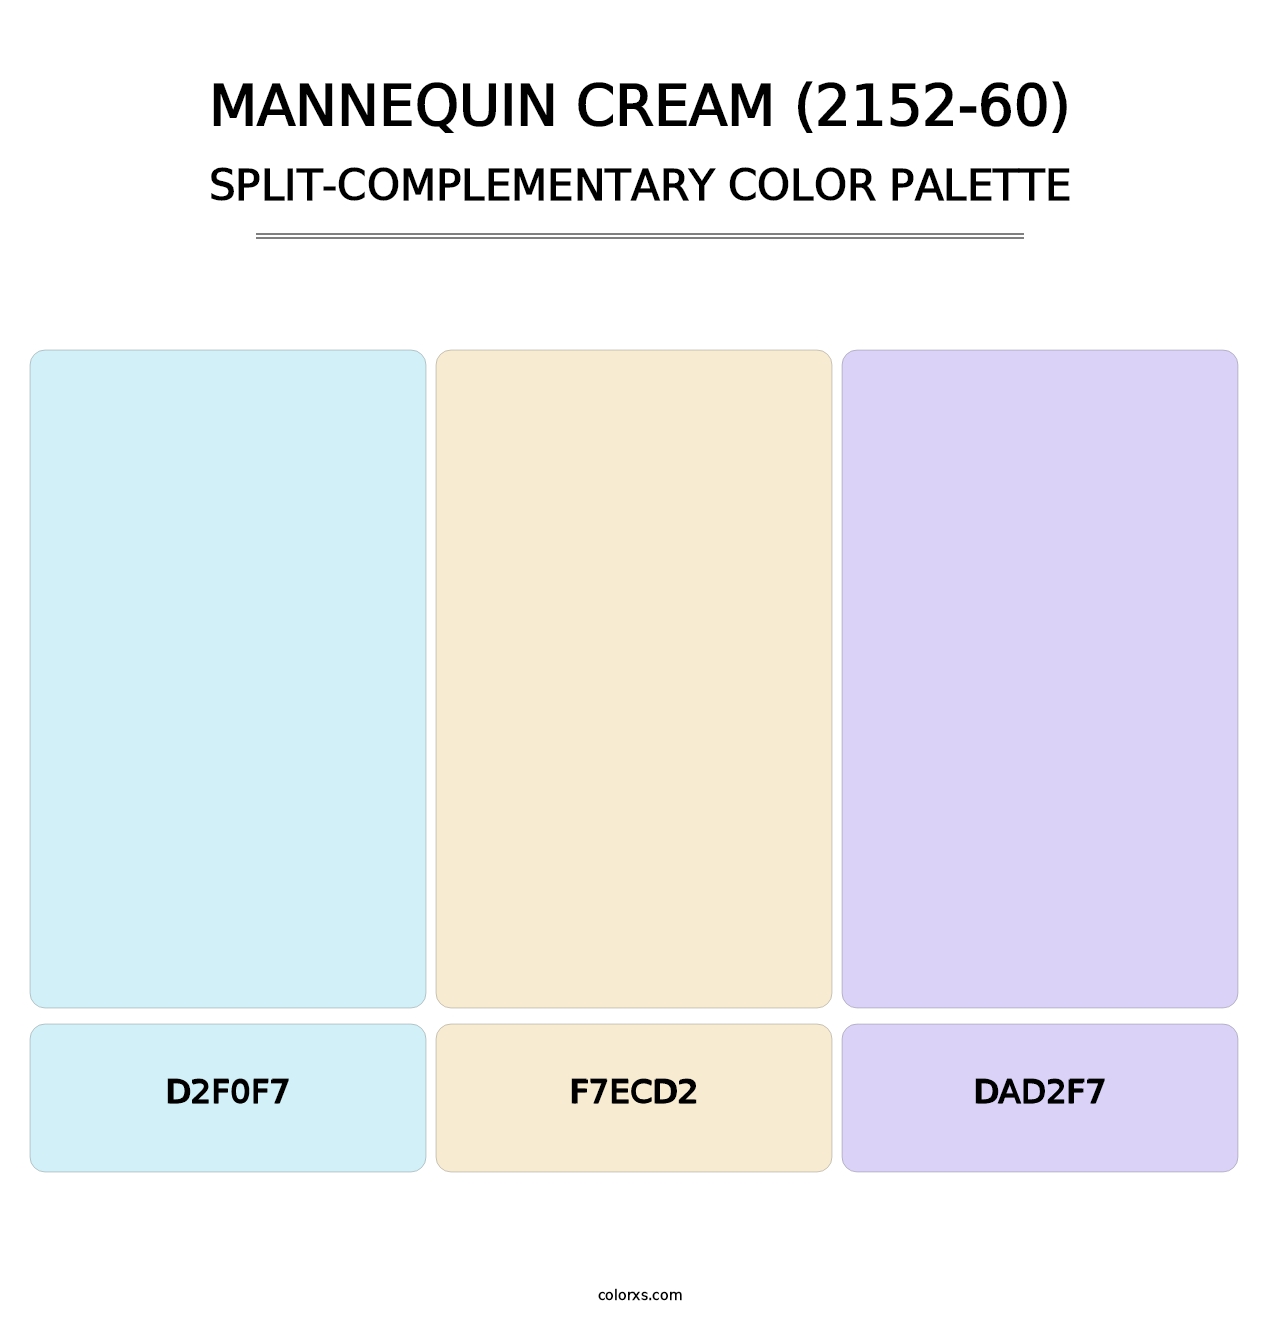 Mannequin Cream (2152-60) - Split-Complementary Color Palette